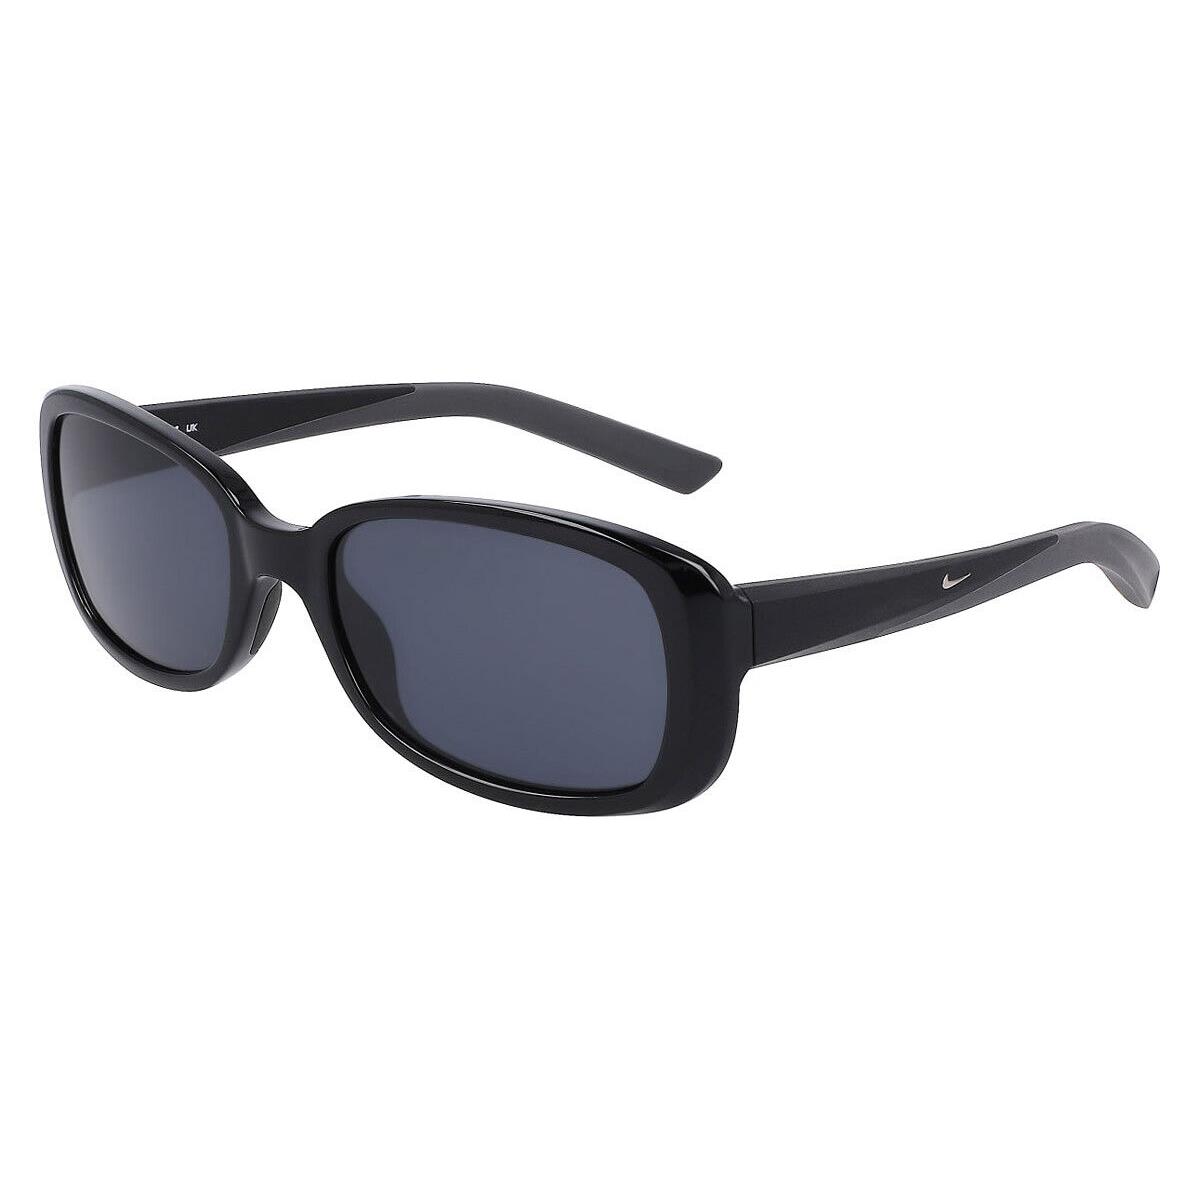 Nike Epic Breeze FD1880 Sunglasses Black Dark Gray 55mm - Frame: Black / Dark Gray, Lens: Dark Gray